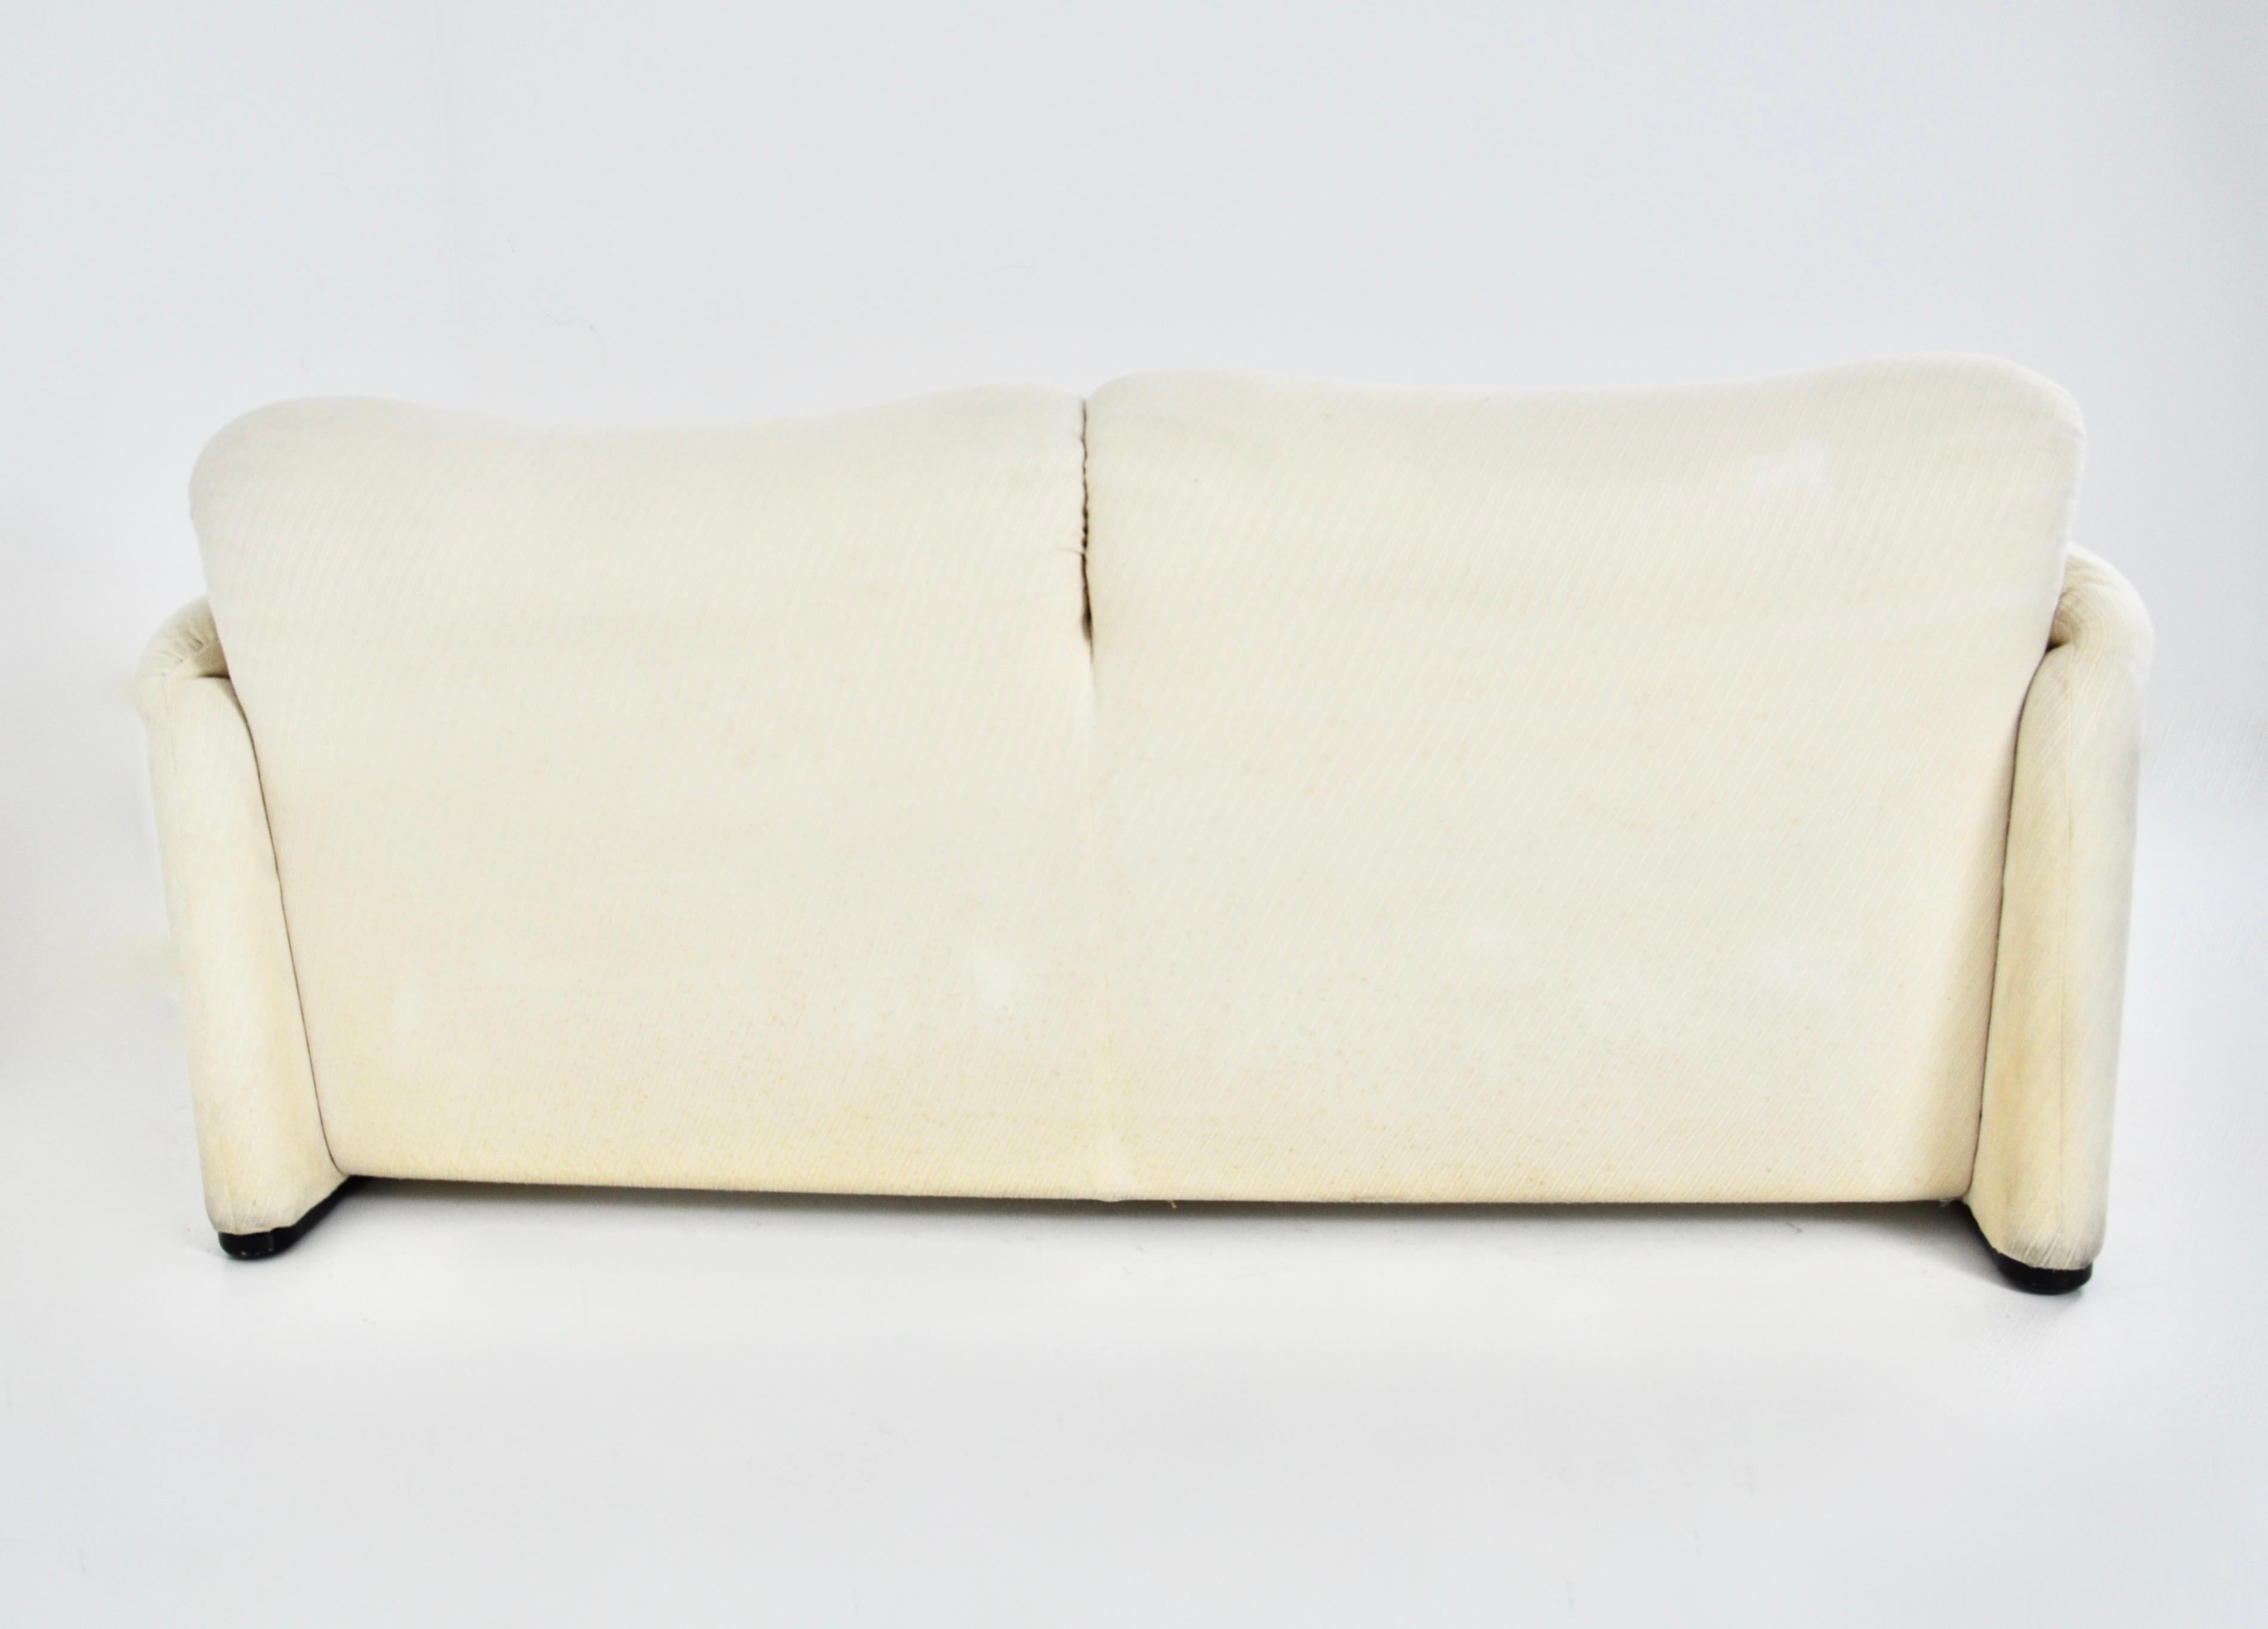 Maralunga sofa by Vico Magistretti for Cassina, 1970s For Sale 2